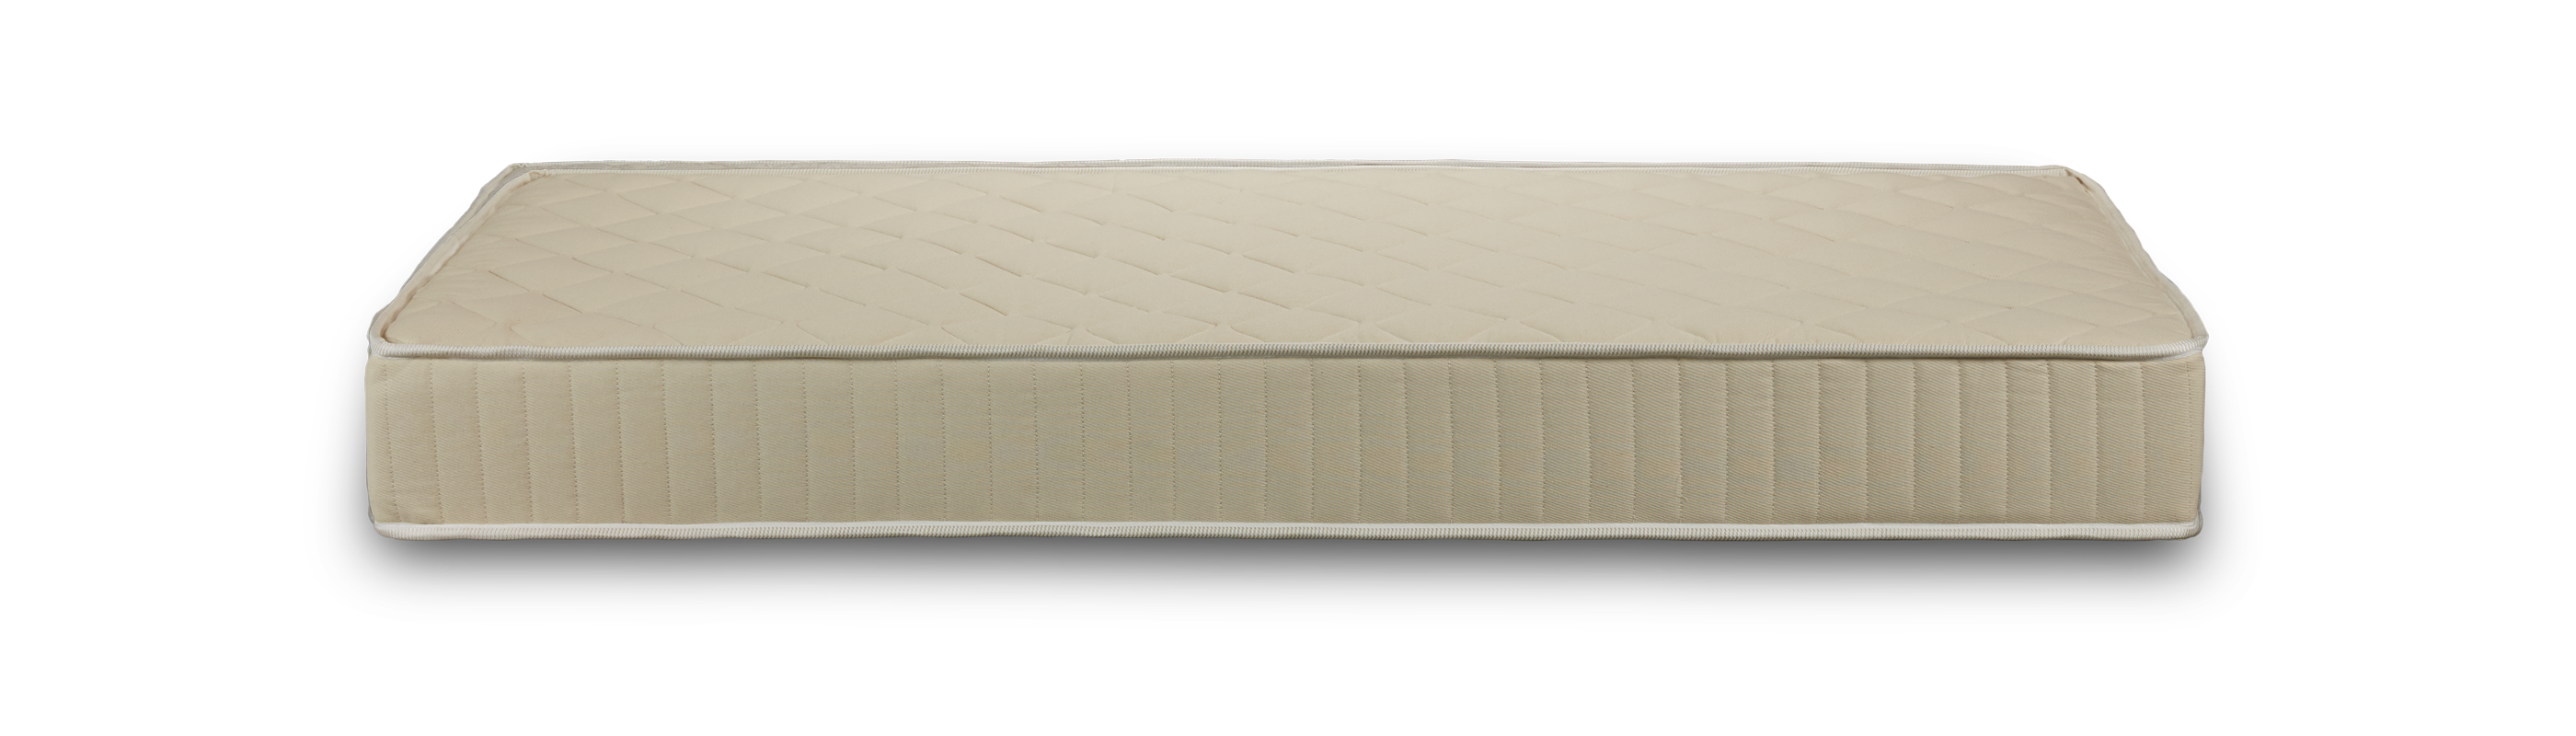 Quilted spring mattress | Standard 